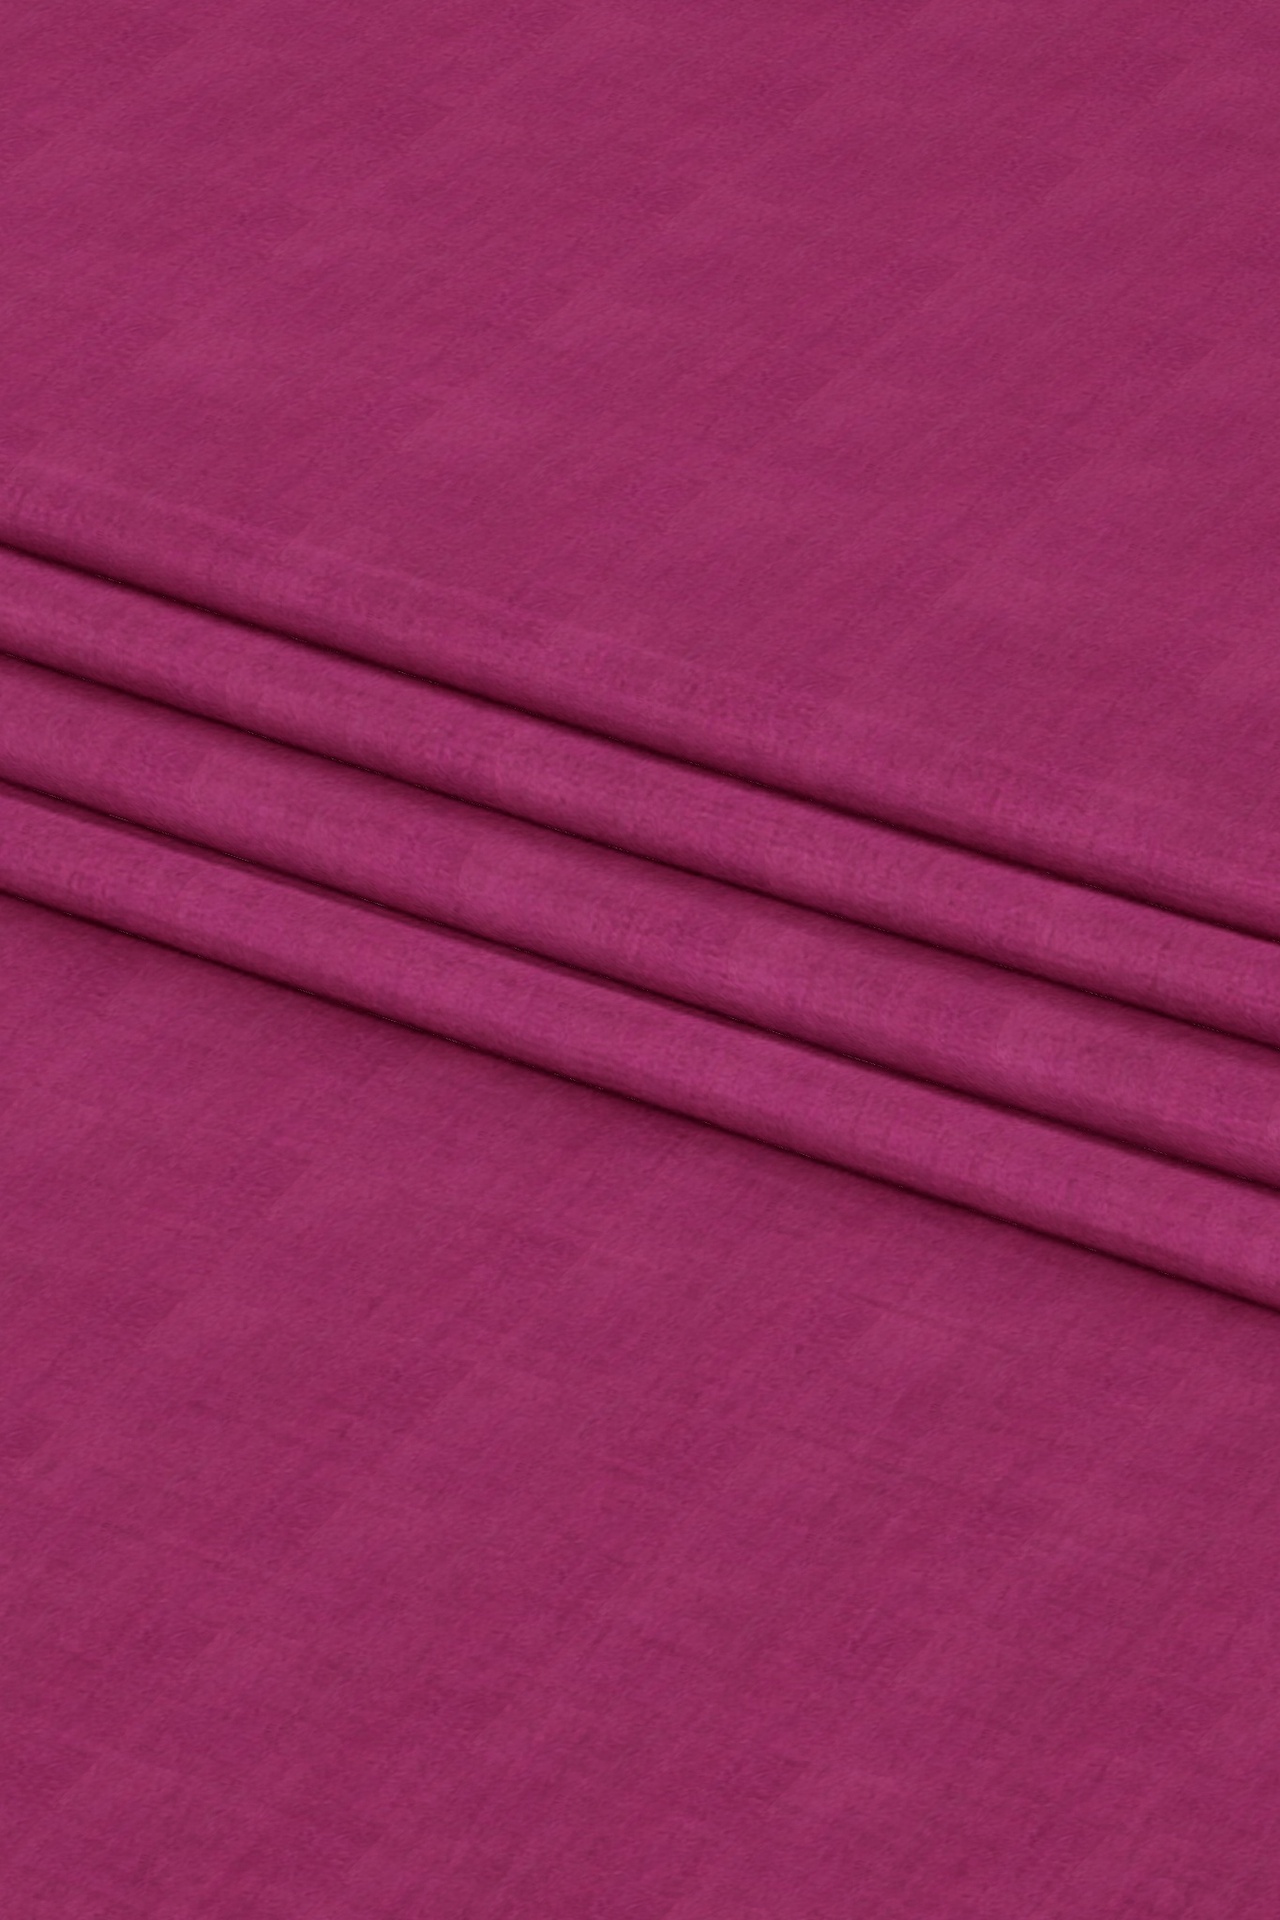 Pink Handspun Handwoven Cotton Fabric